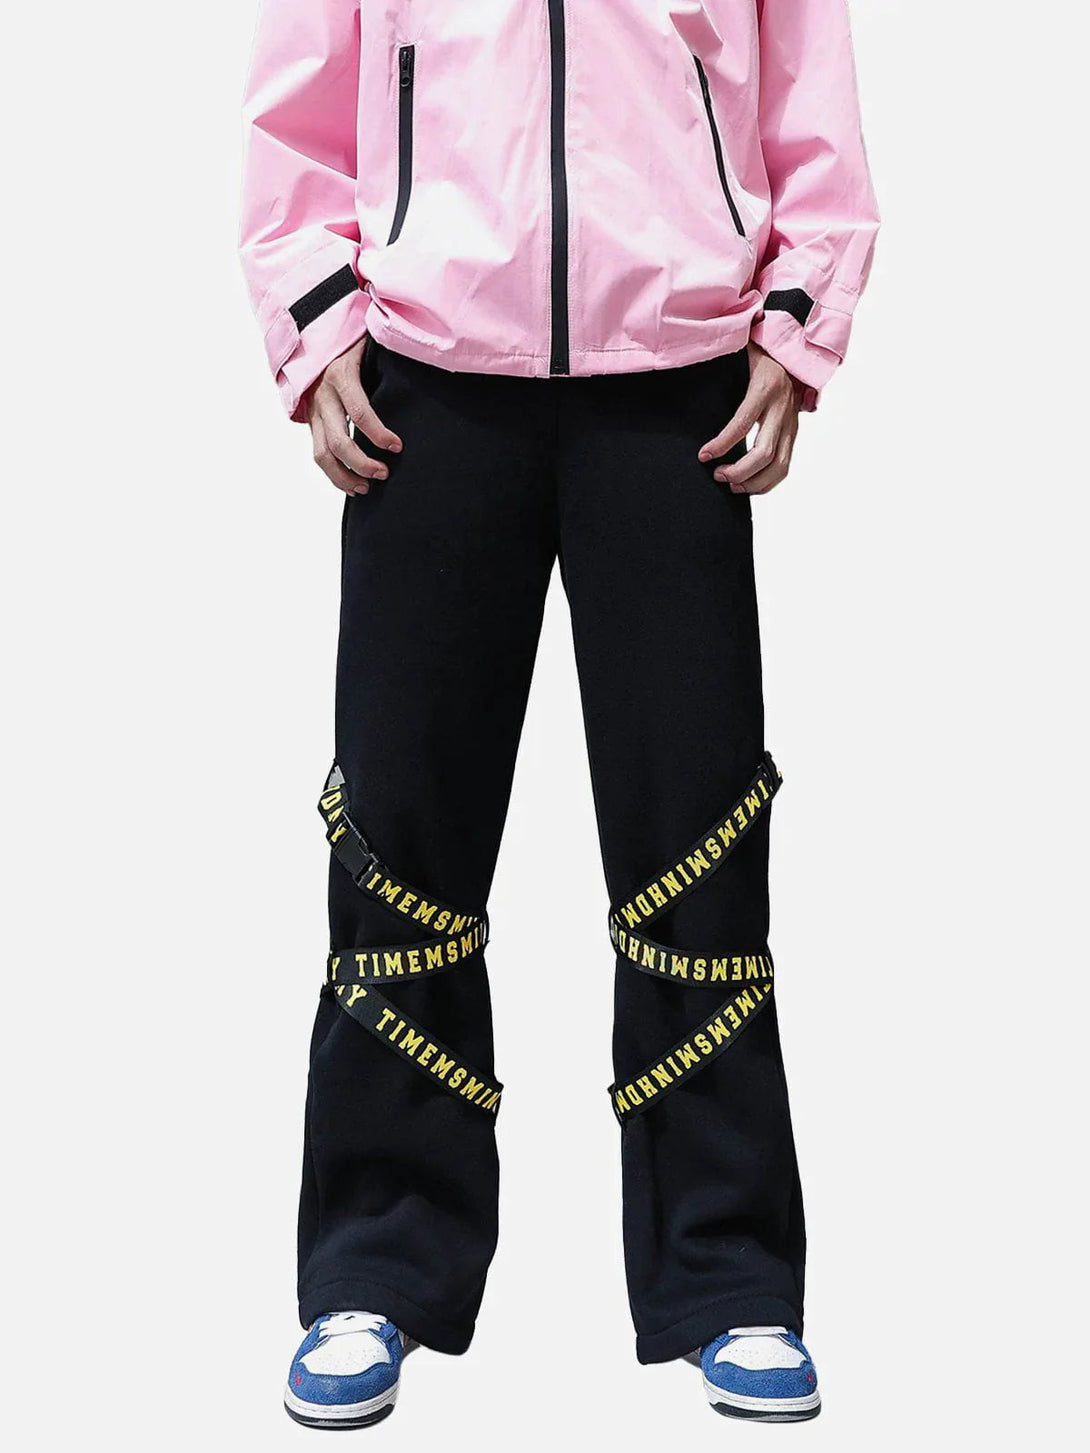 Majesda® - Leg Tie Design Pants outfit ideas streetwear fashion